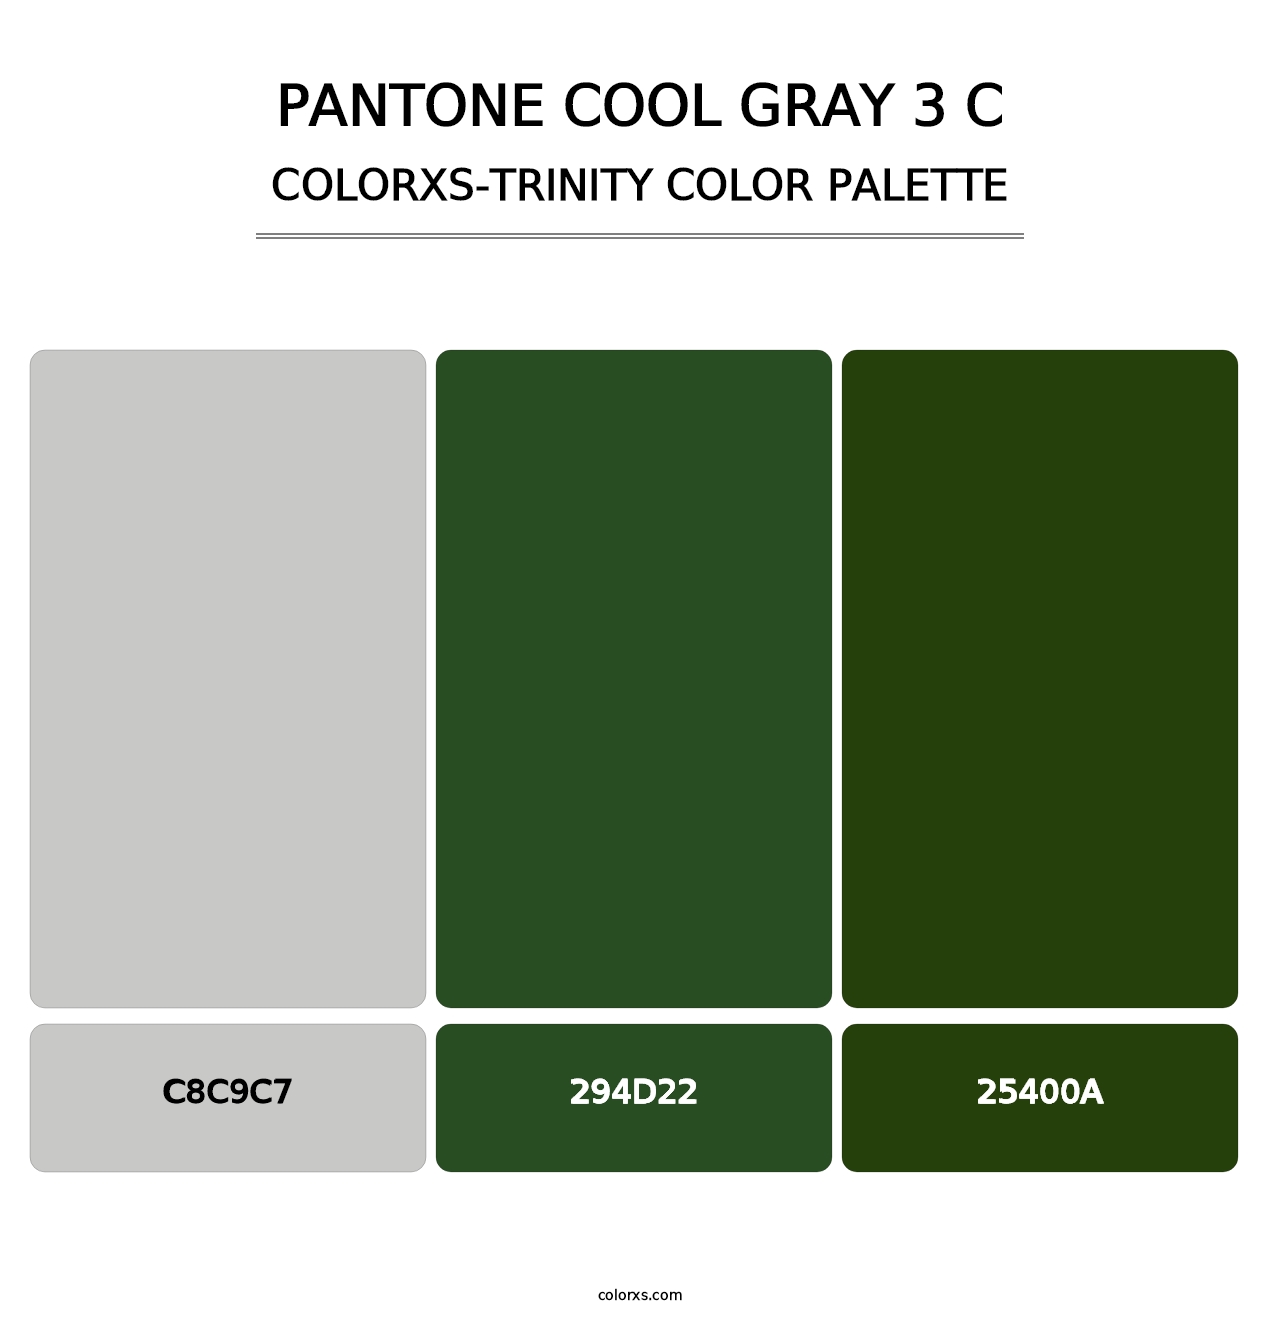 PANTONE Cool Gray 3 C - Colorxs Trinity Palette